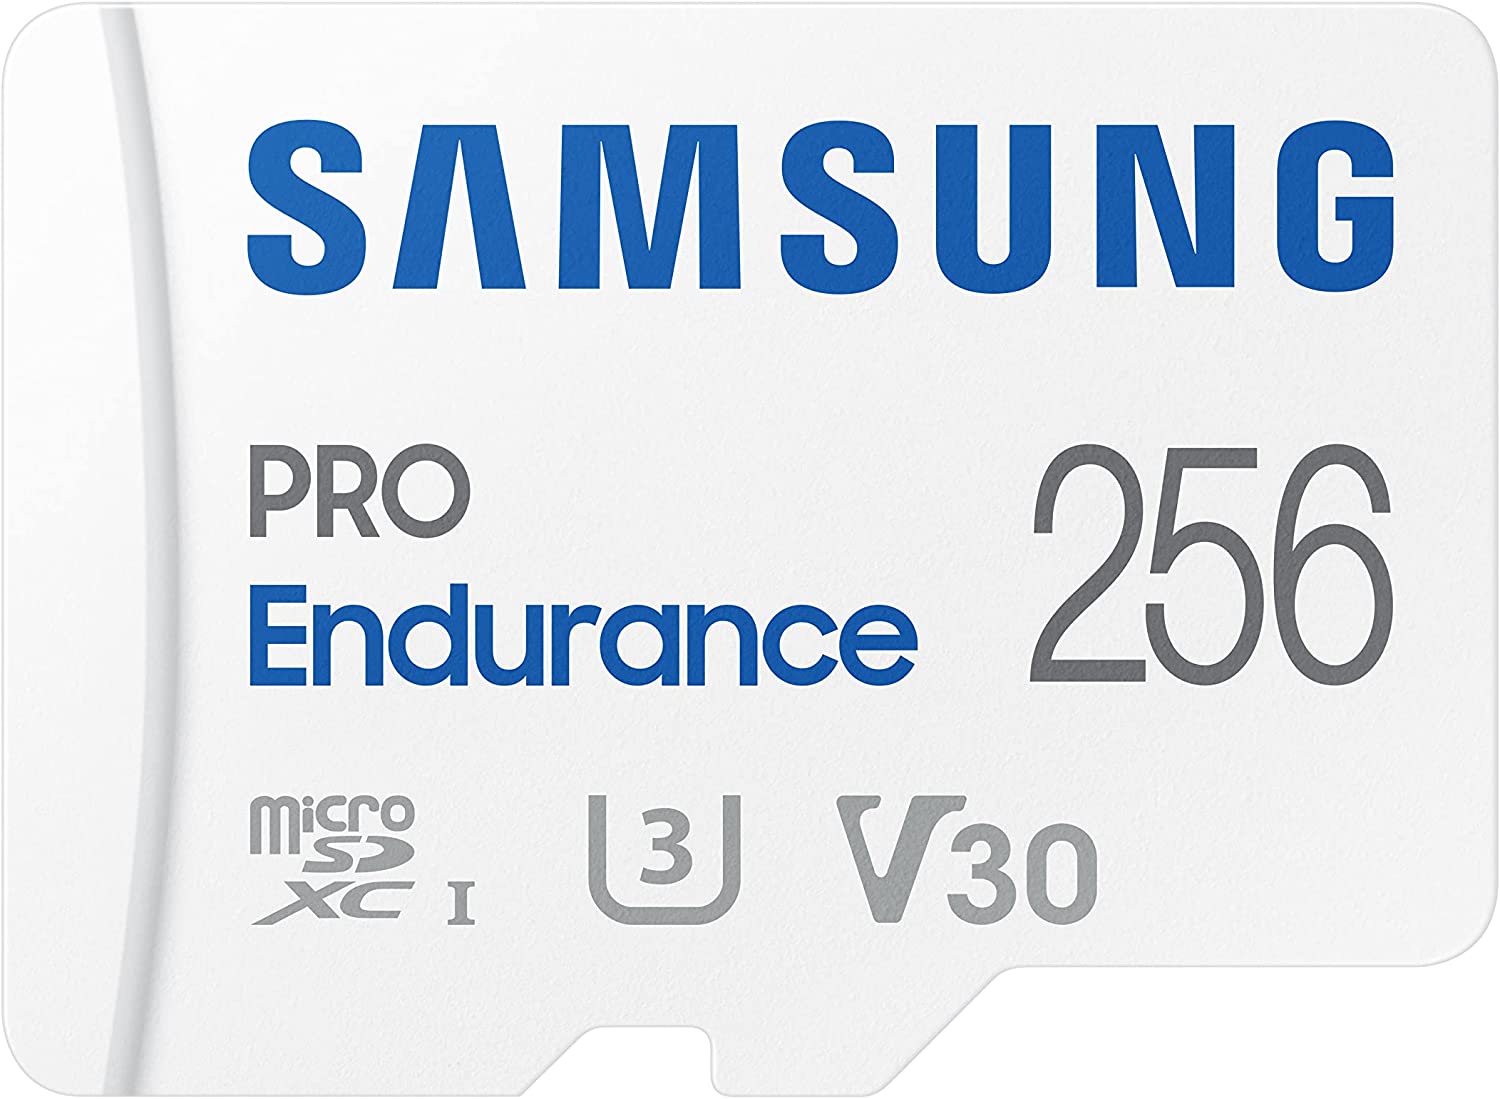 Samsung 256GB Pro Endurance $49.99  - ($5 off)